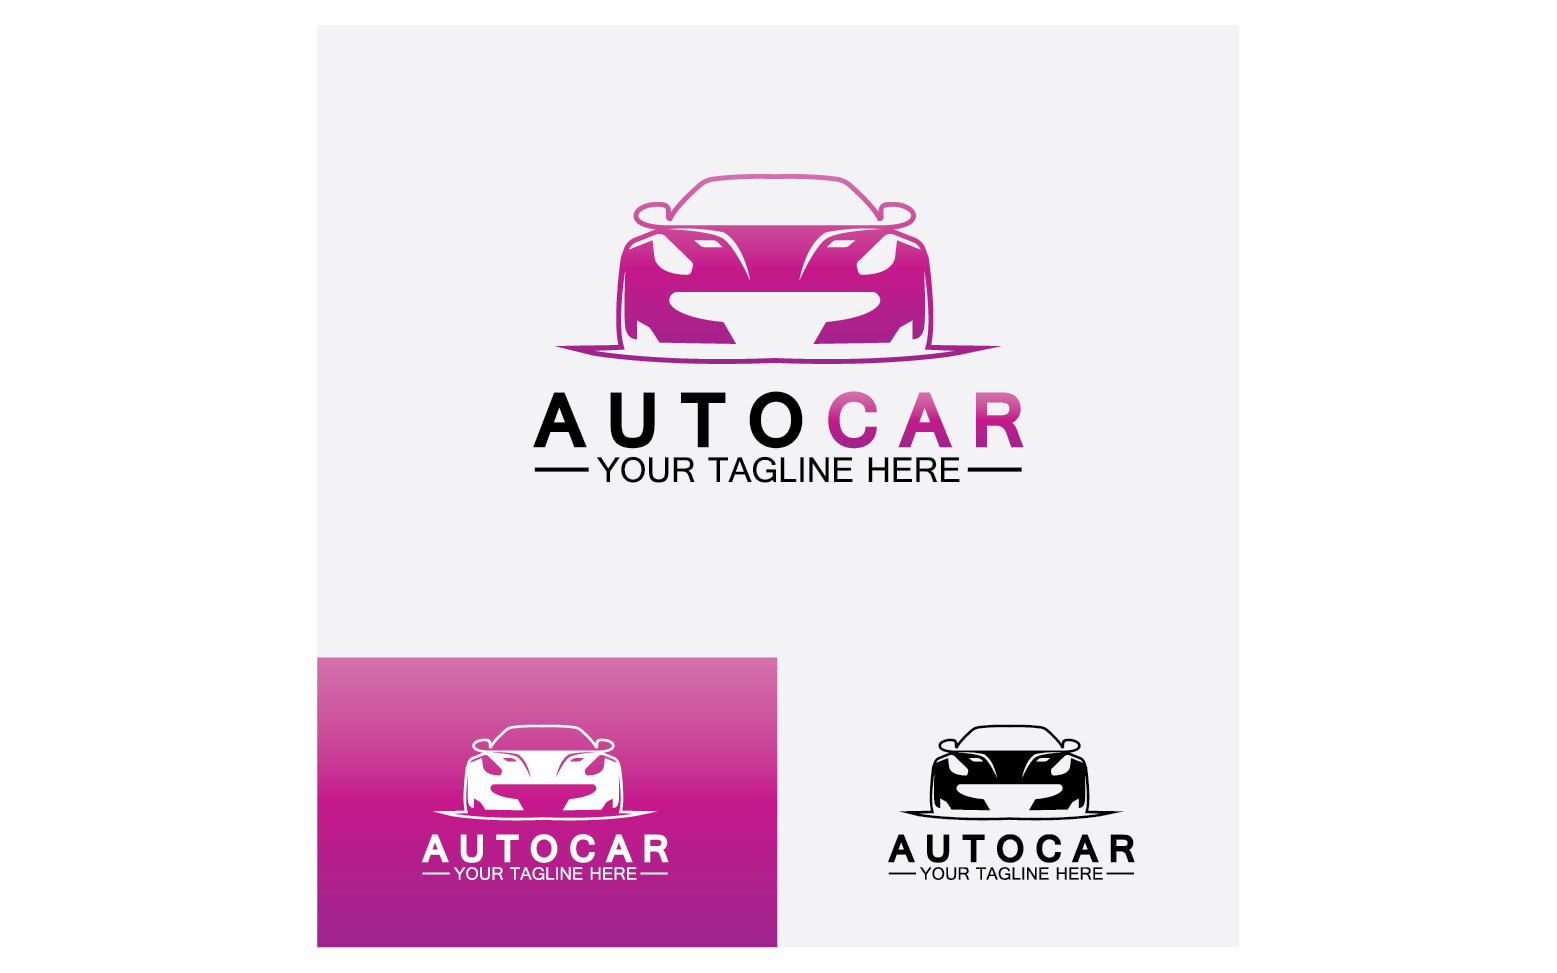 Cars dealer, automotive, autocar logo design inspiration. v29